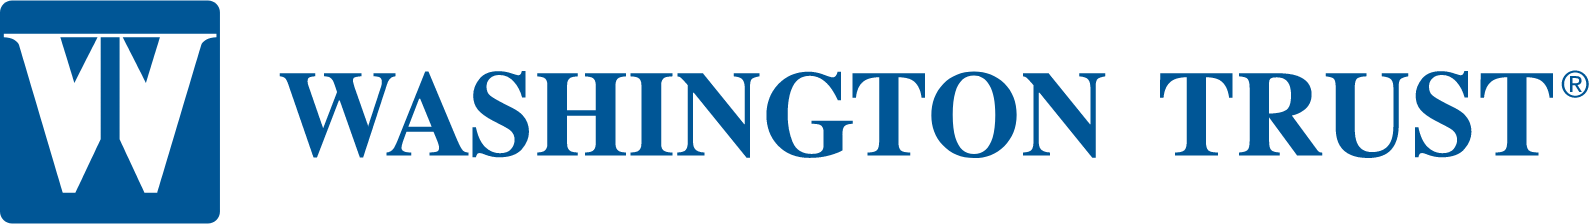 Washington Trust Bancorp logo large (transparent PNG)